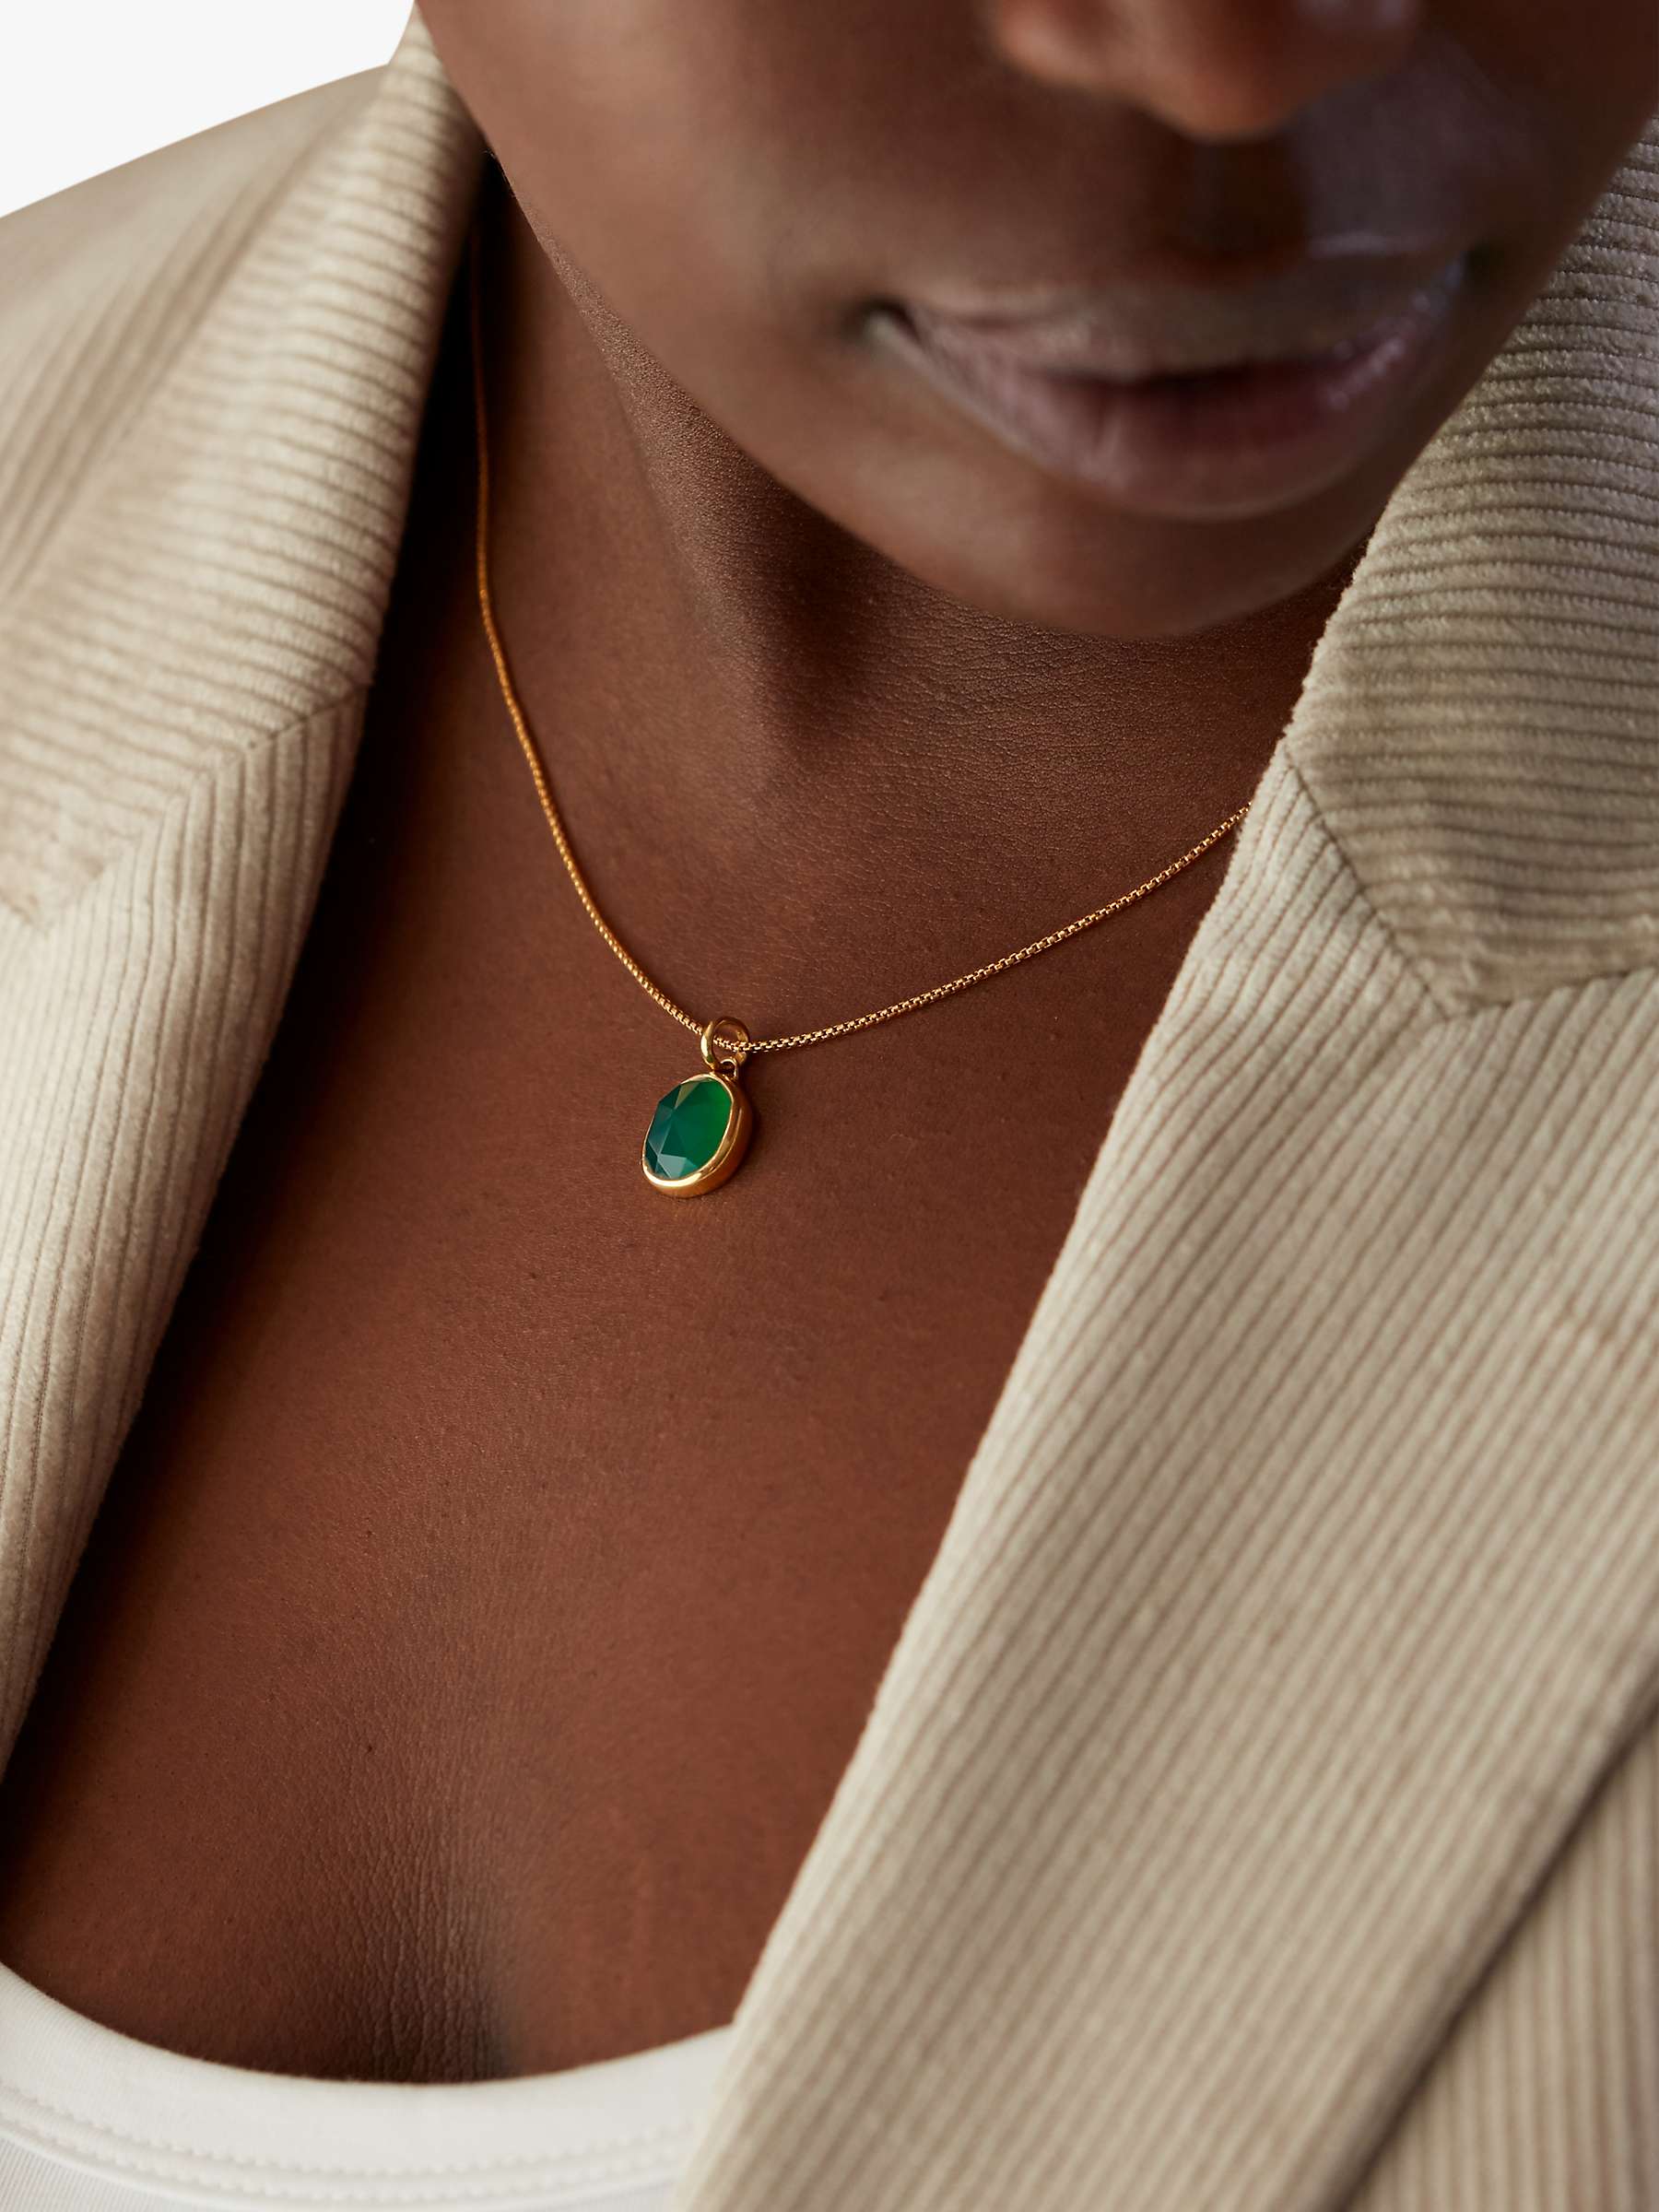 Buy Monica Vinader Siren Chain Necklace, Gold Online at johnlewis.com